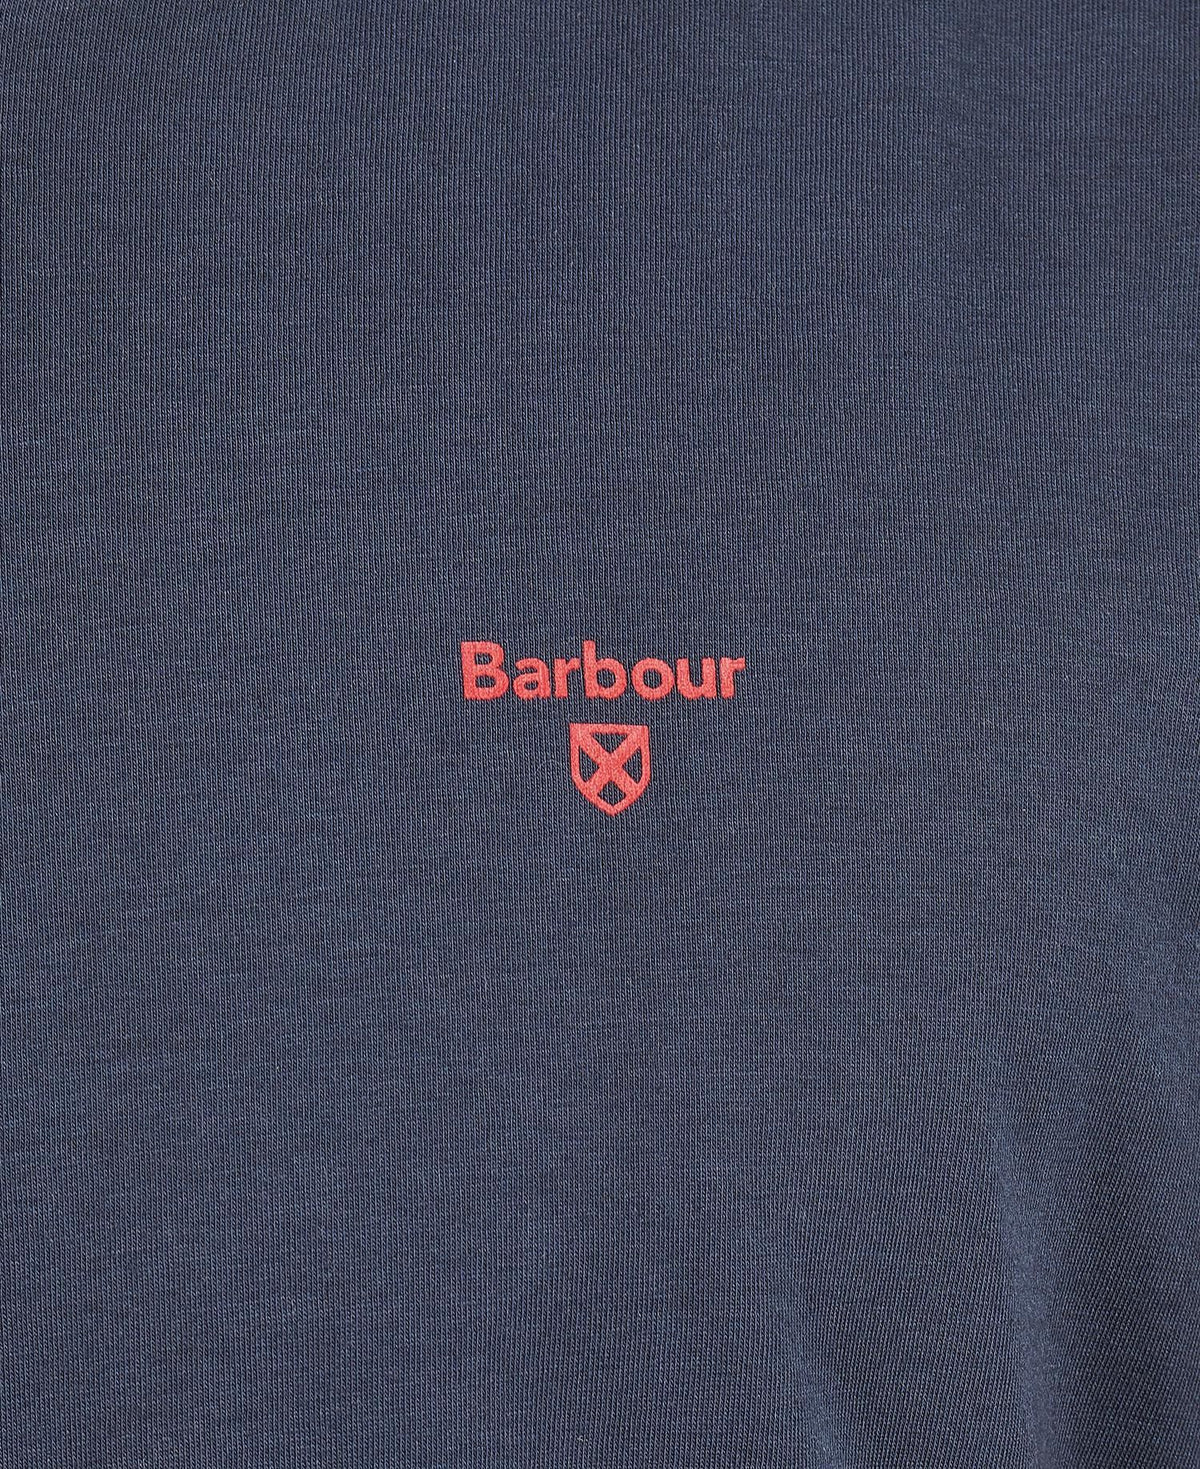 Barbour Mens 'Doug' PJ/ Pyjama Set - L/S Tee and Checked Long Bottoms, 06, Mnw0012, Red Tartan